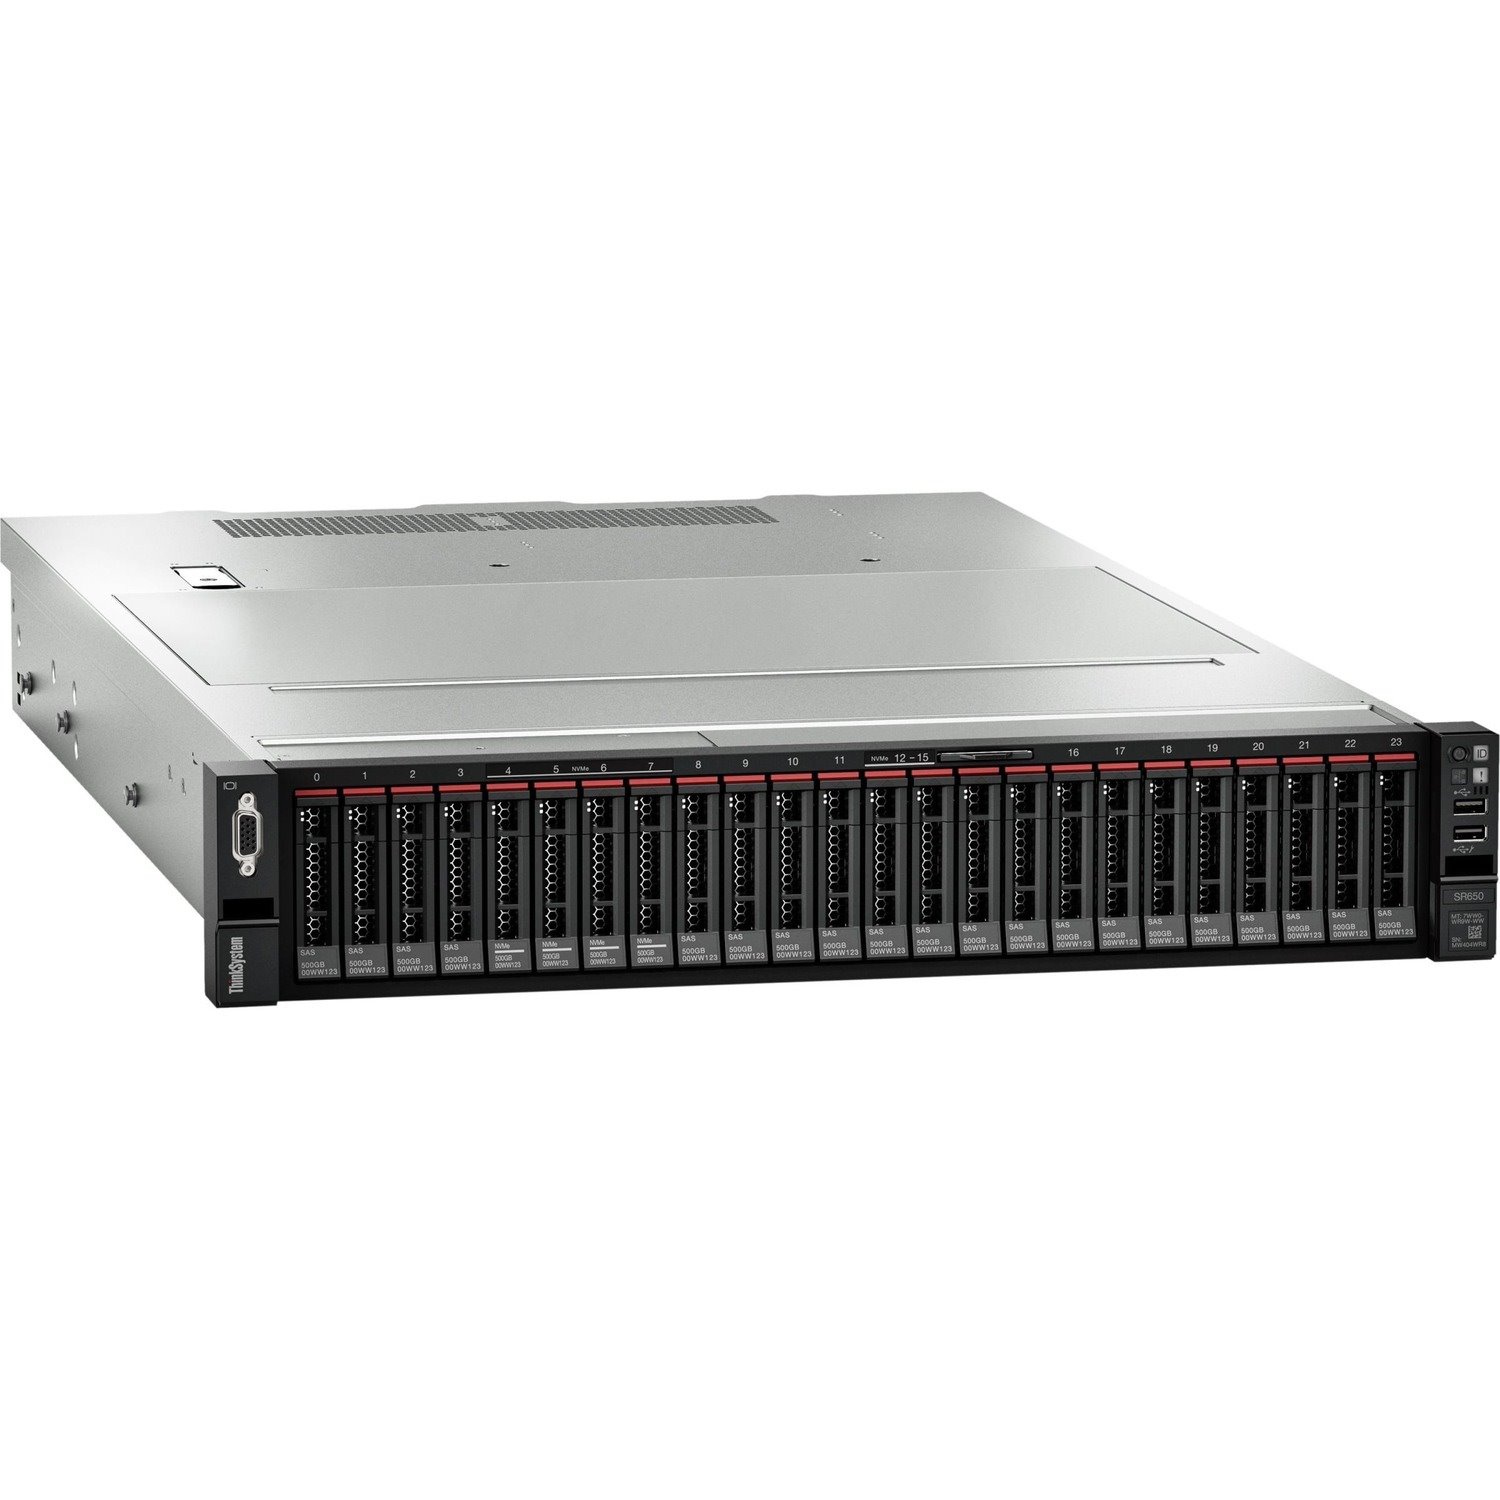 Lenovo ThinkSystem SR650 7X06A0ETAU 2U Rack Server - 1 x Intel Xeon Silver 4208 2.10 GHz - 16 GB RAM - 12Gb/s SAS, Serial ATA Controller